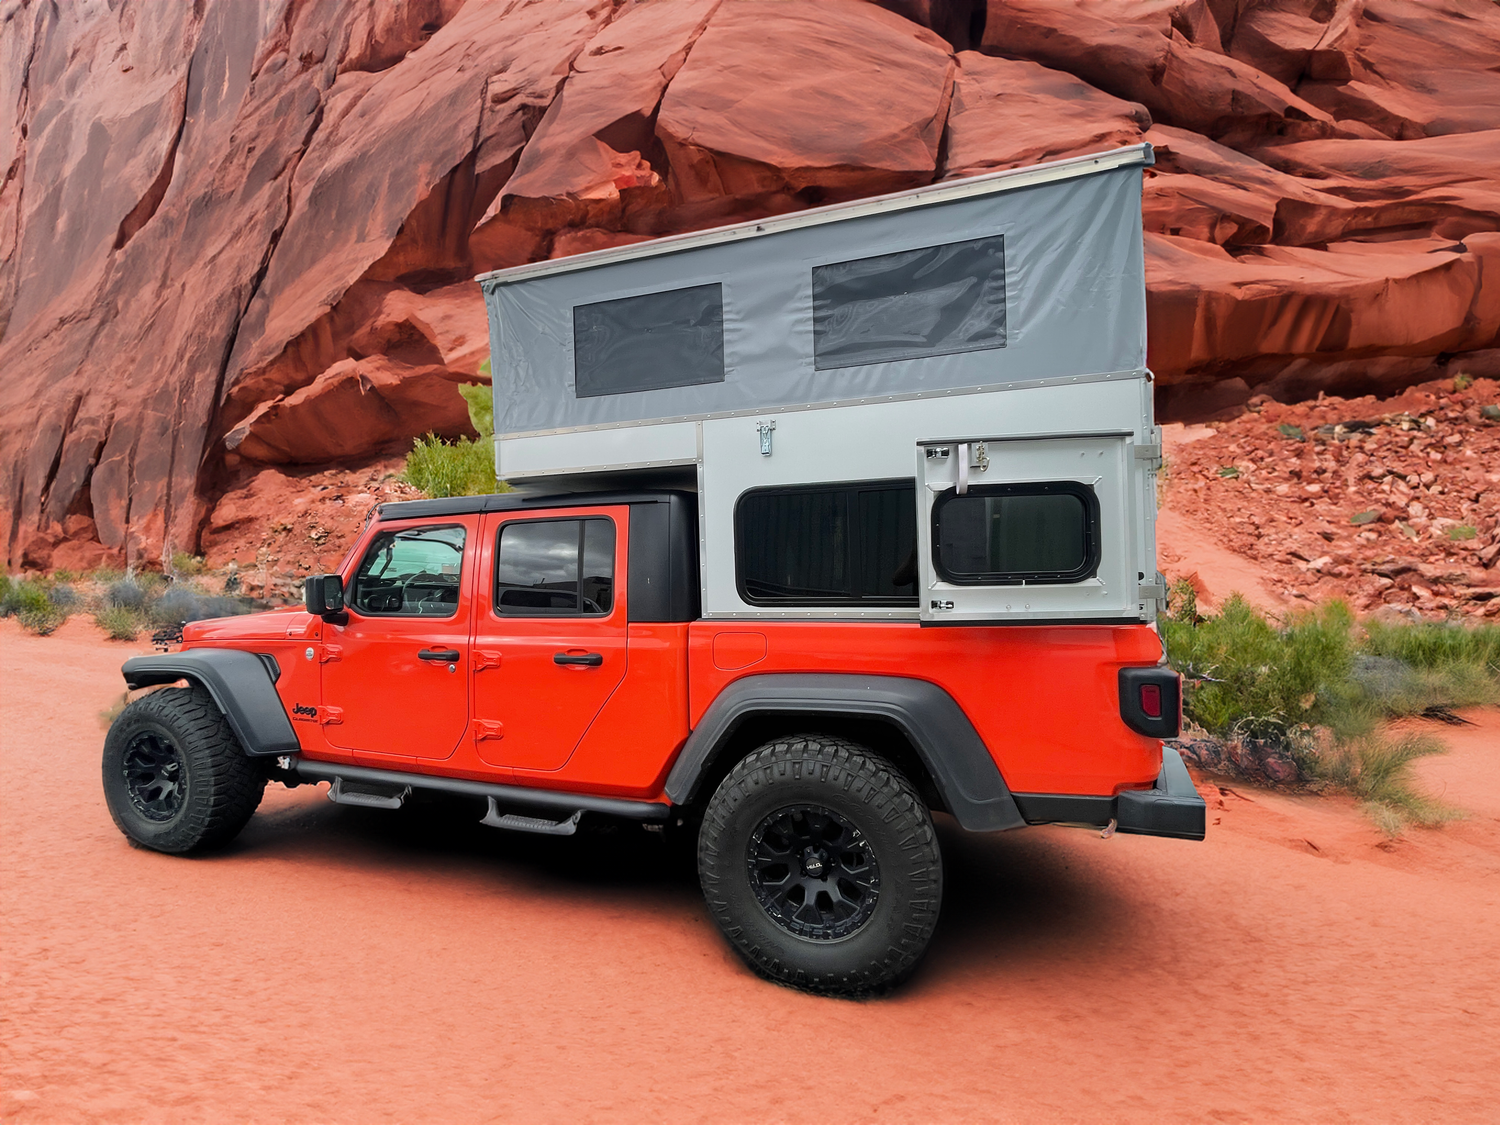 Jeep Gladiator with pop up camper shell in desert landscape. 